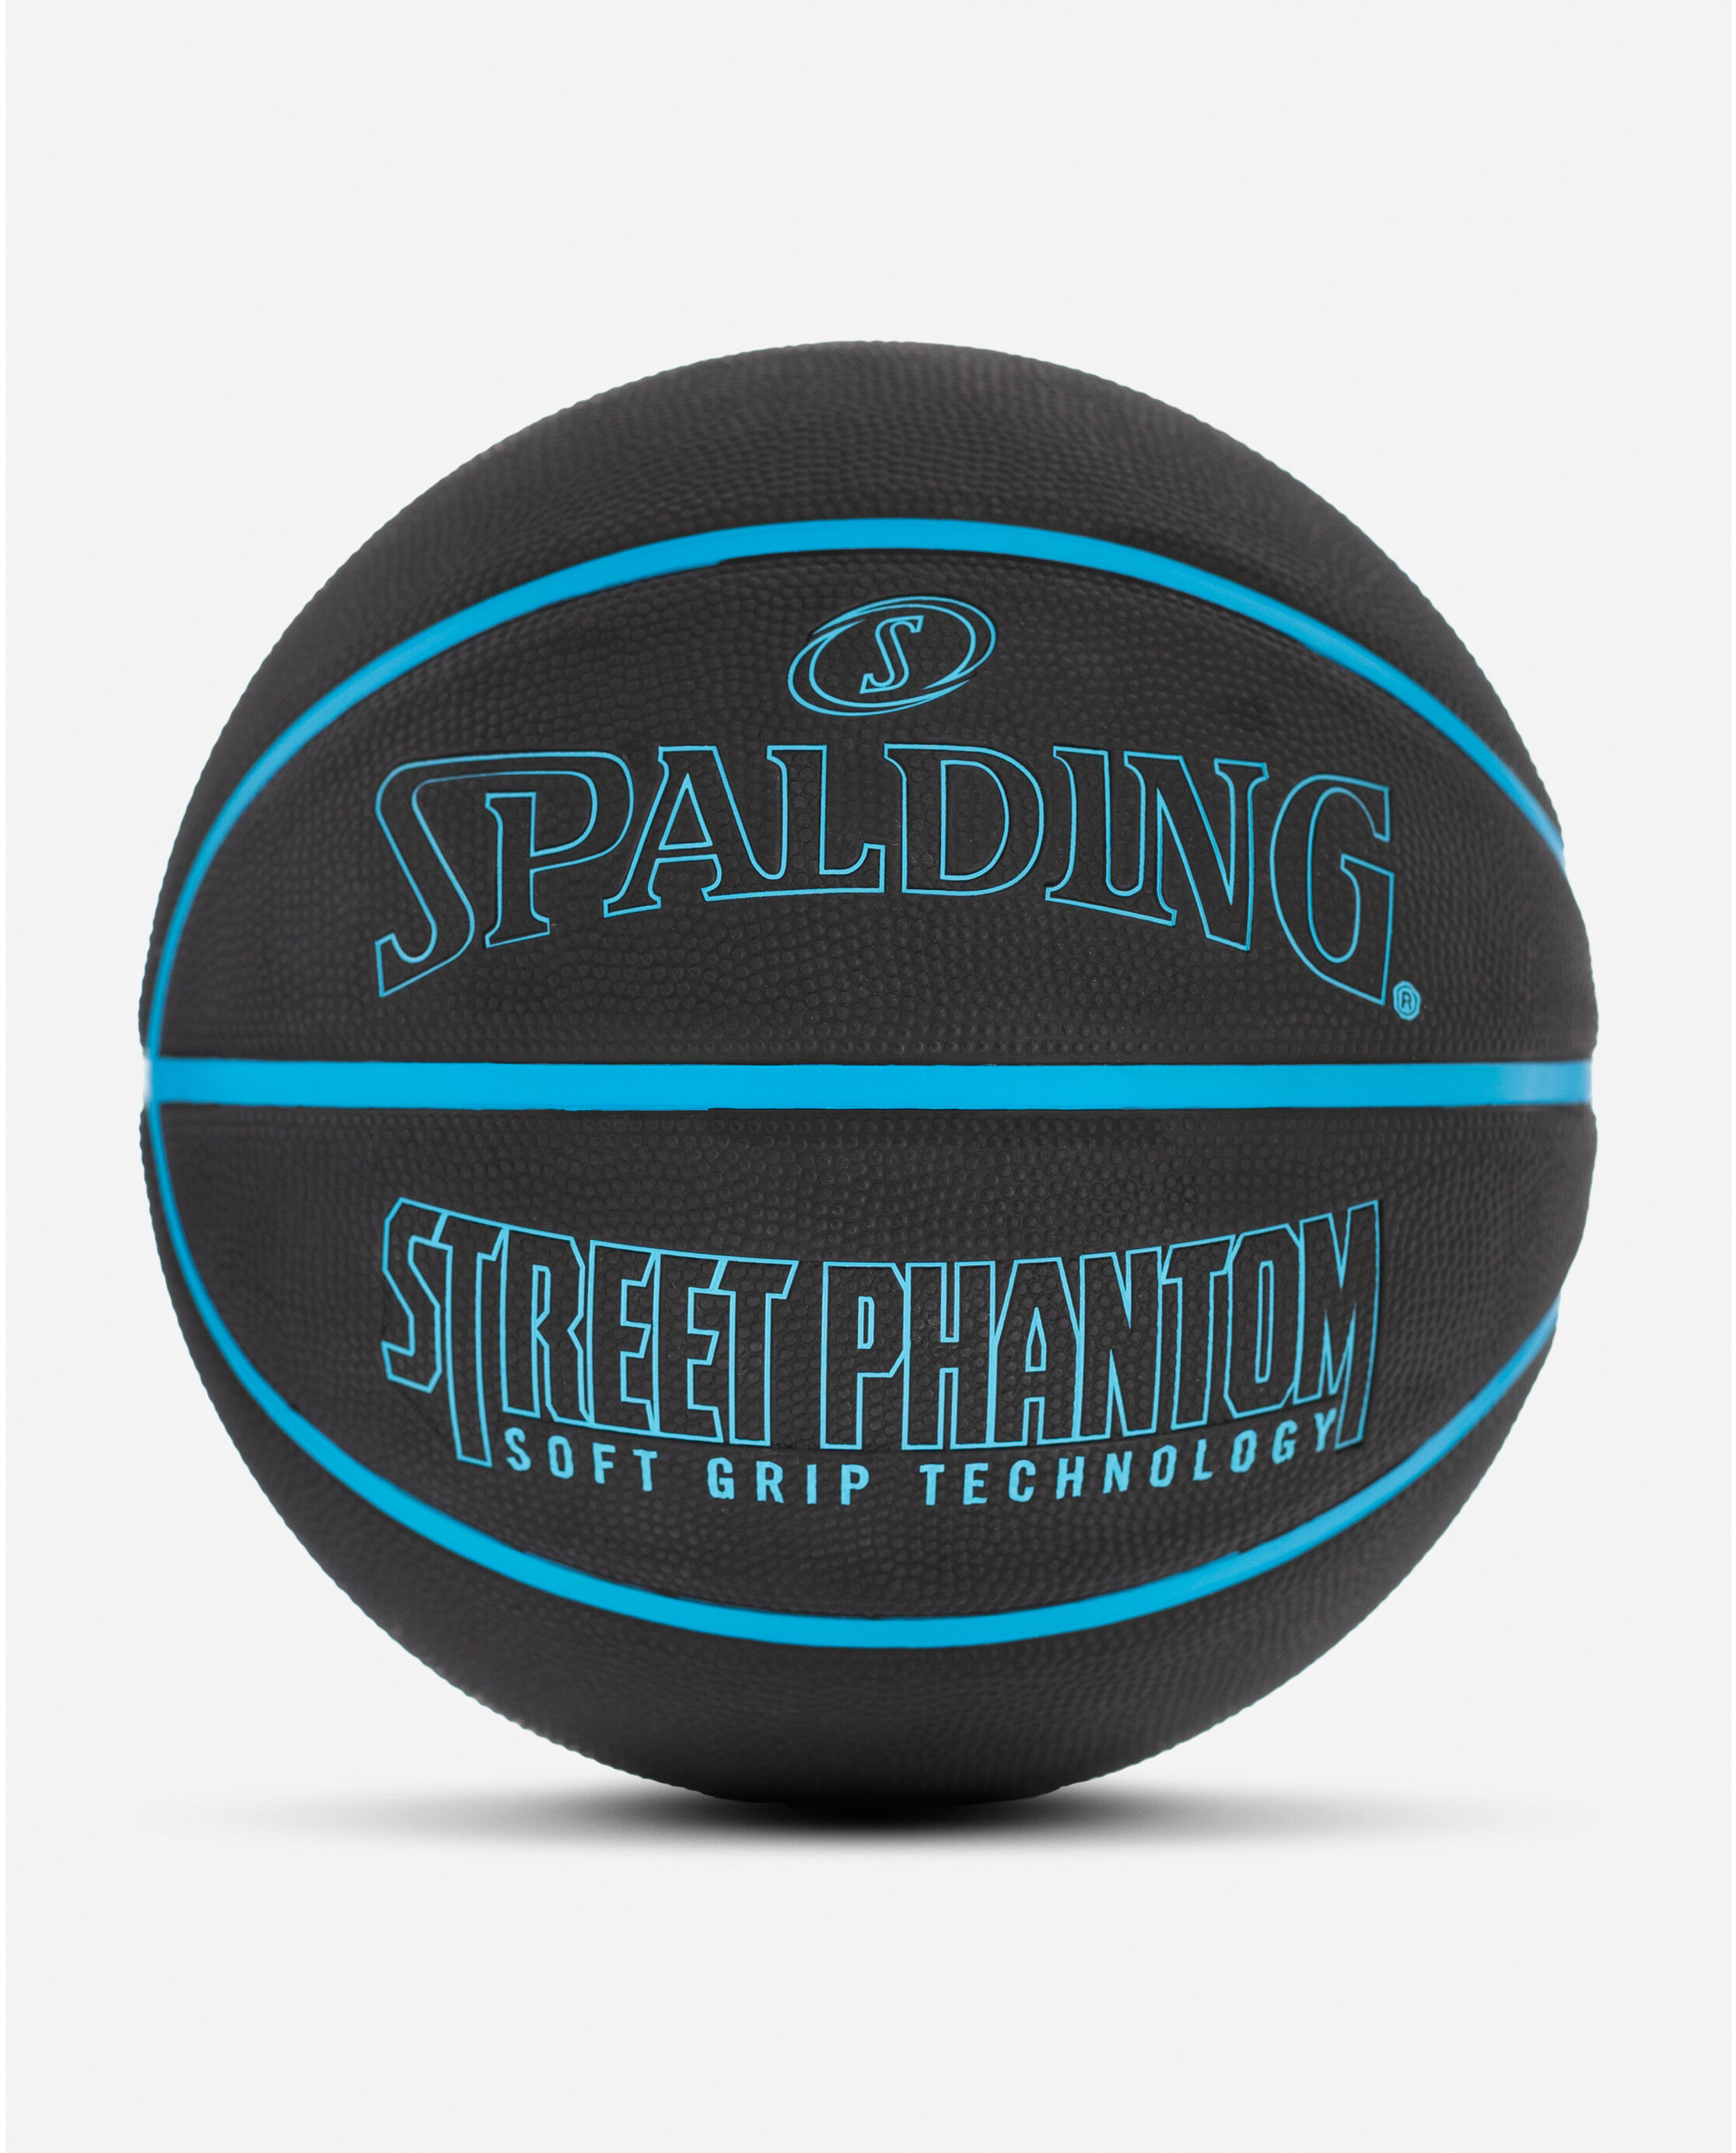 Spalding 71045CA All-Star Pro Teal/Black Rubber Basketball 28.5/ Size 6 Black/Teal 